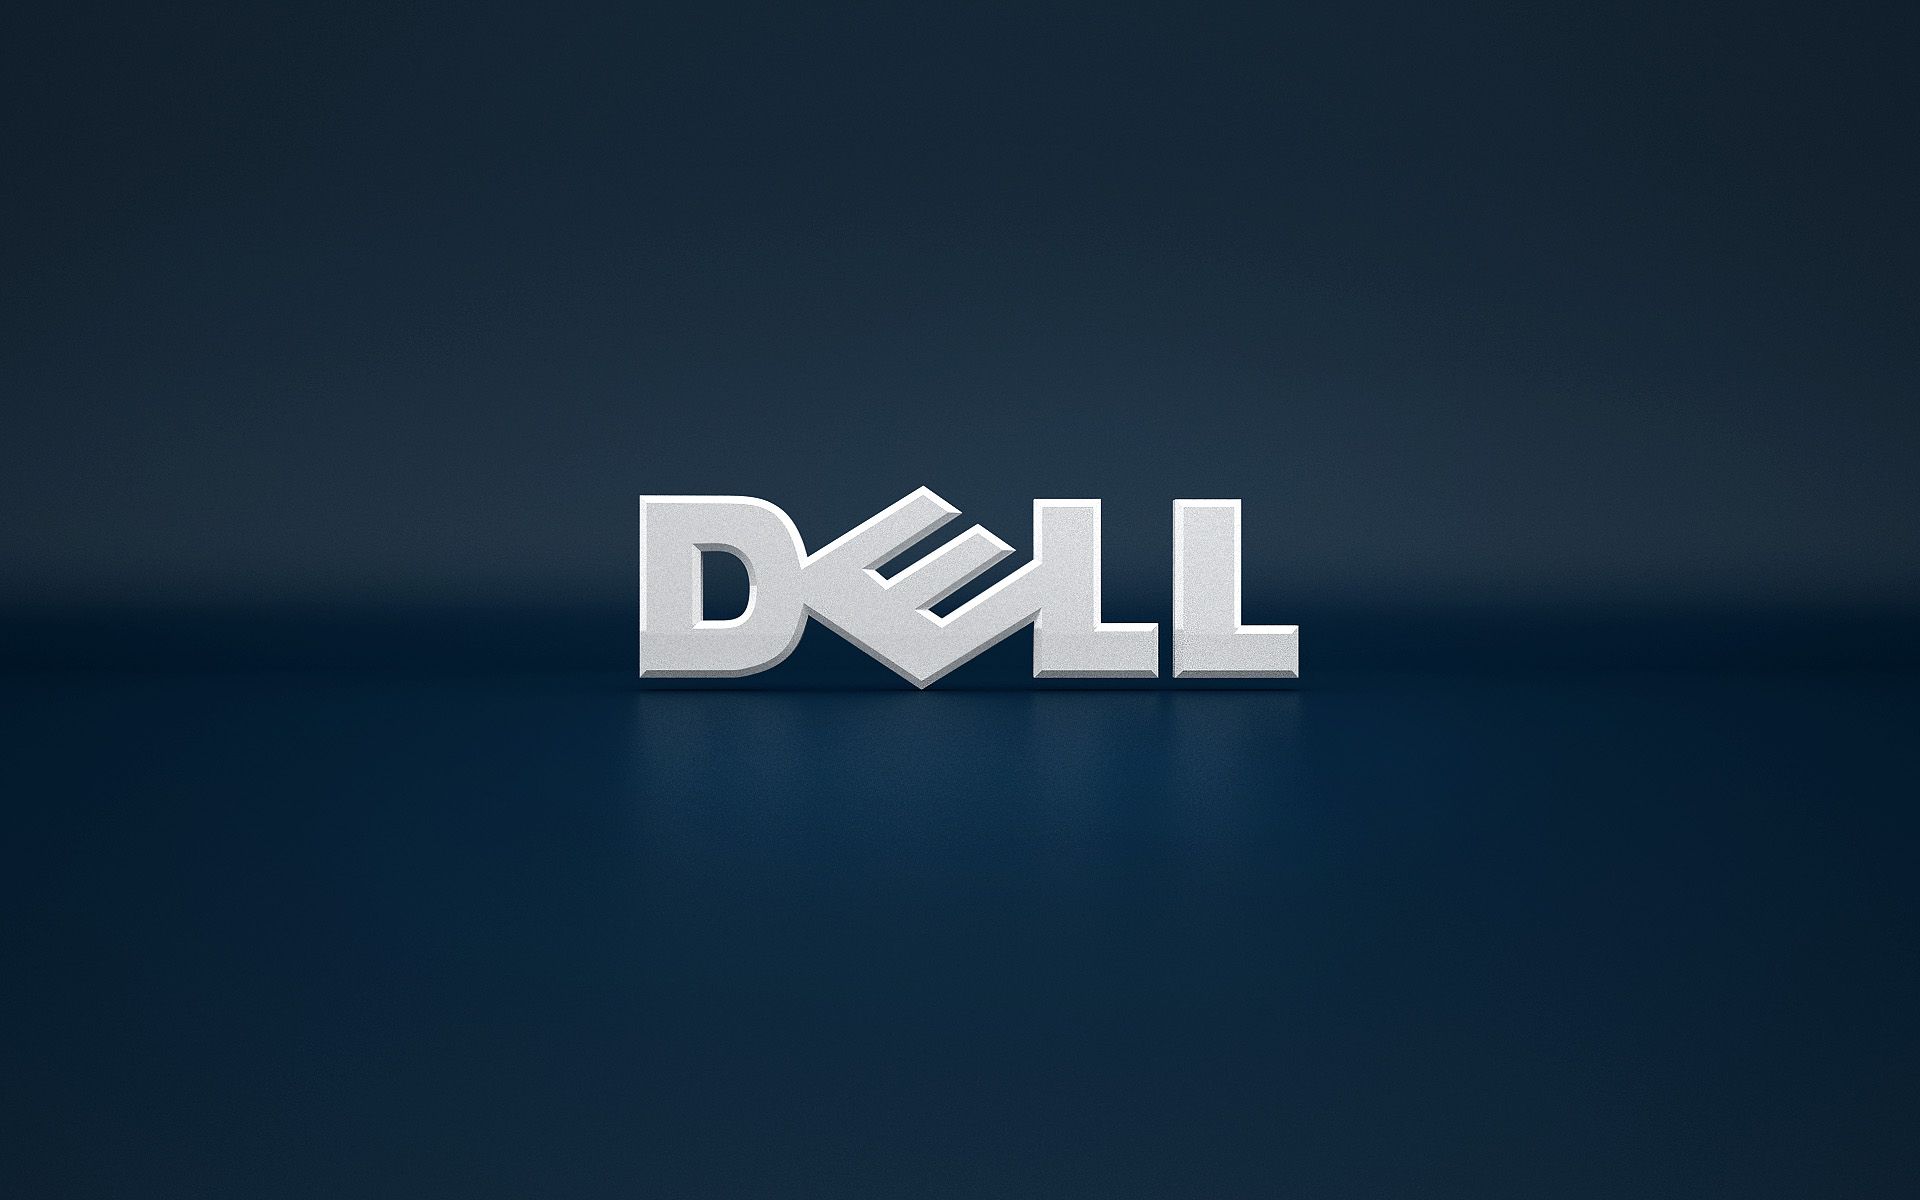 Dell Desktop Background Wallpaper